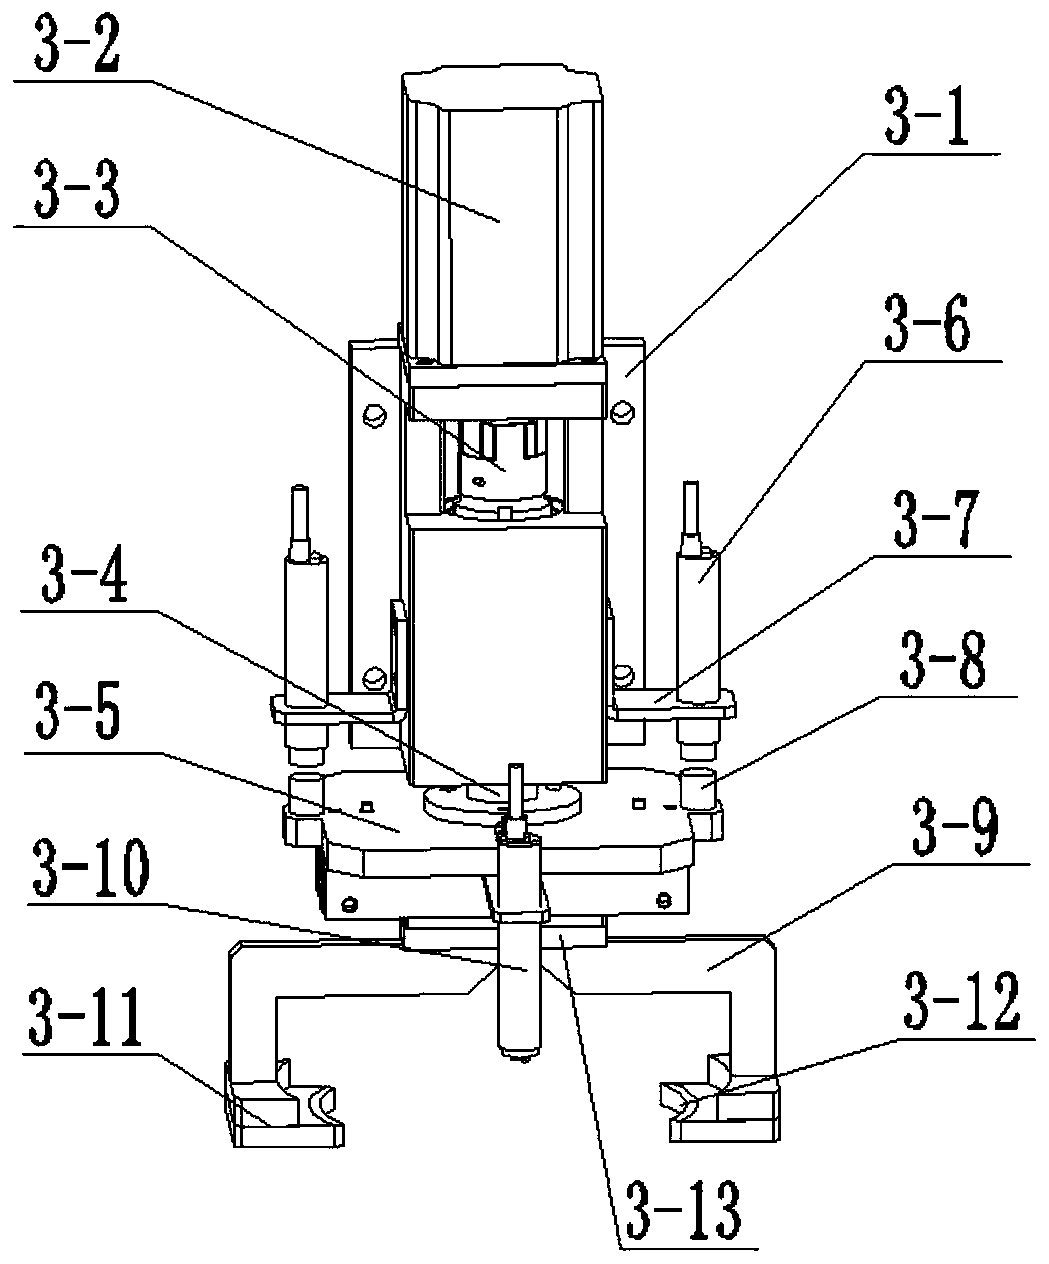 A rotational casting system